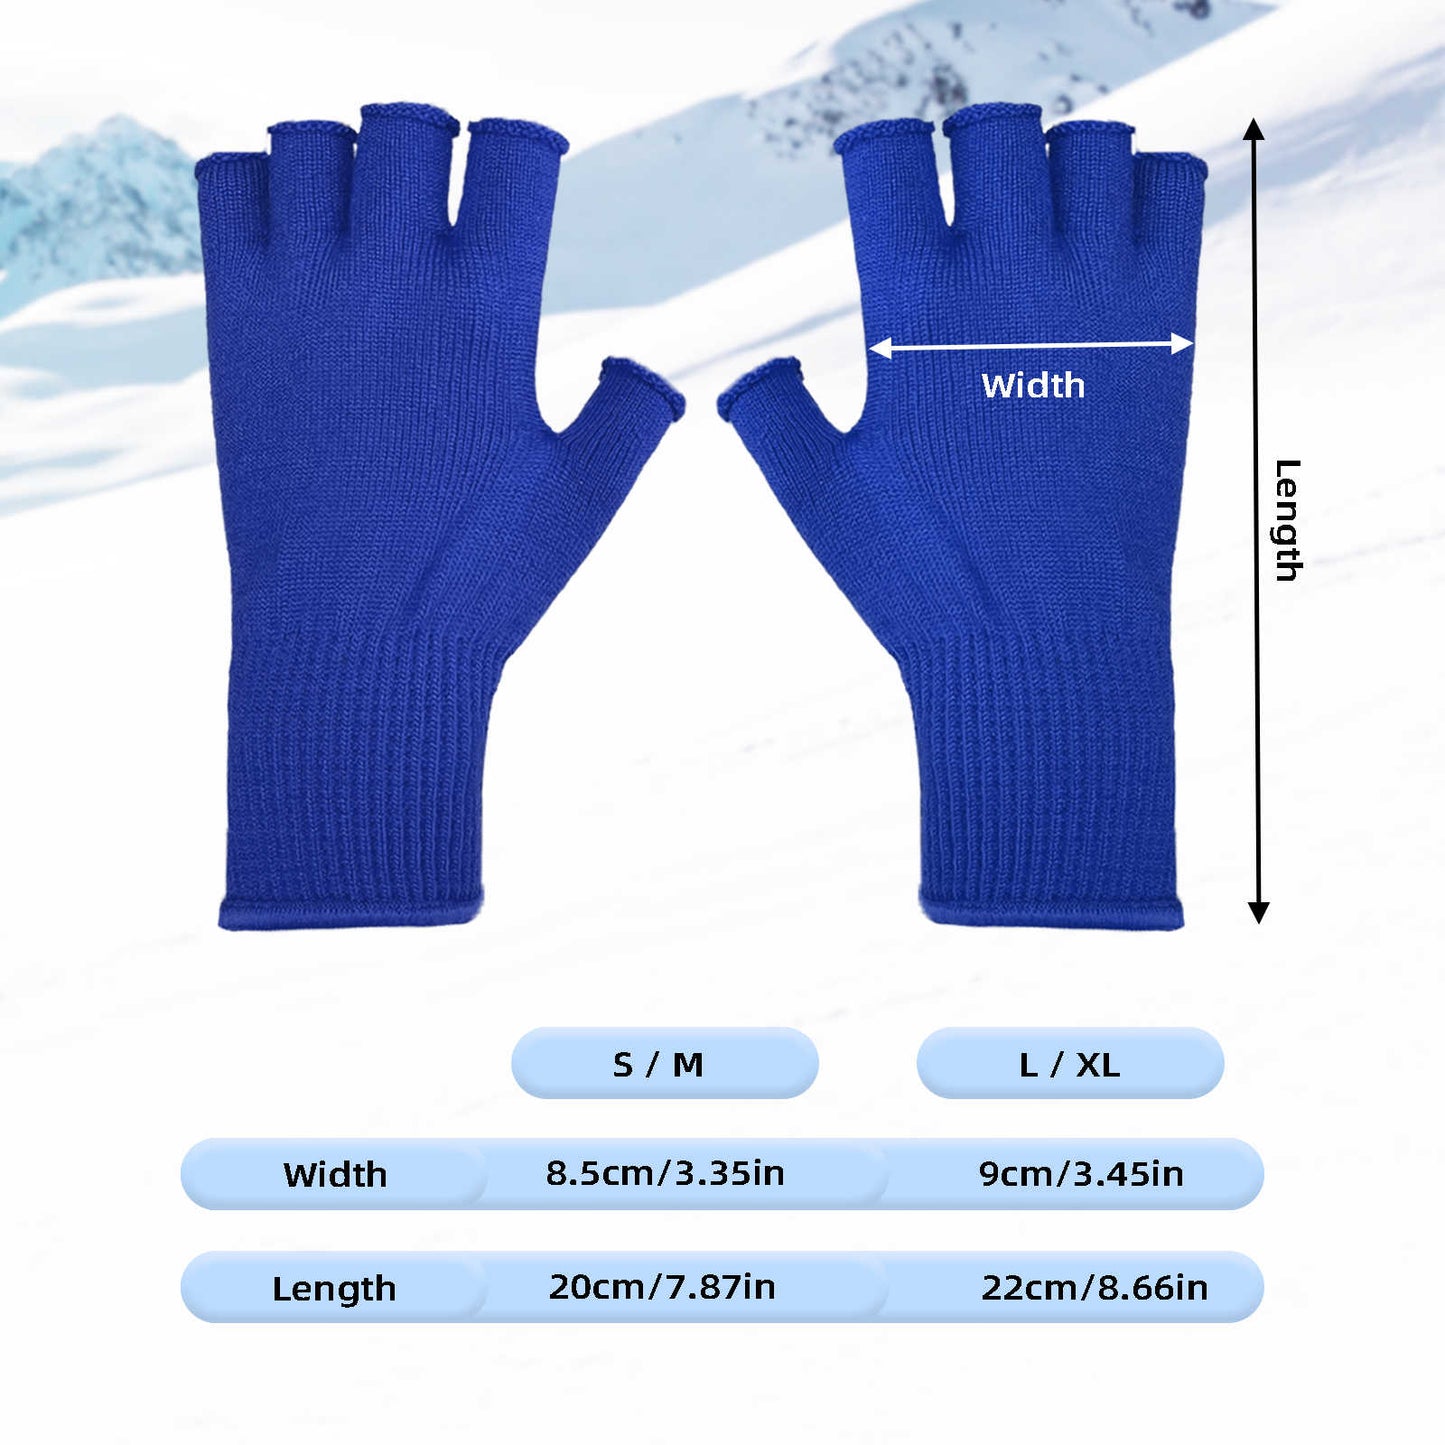 EvridWear 1 Pair Merino Wool String Knit Liner Fingerless Touchscreen Gloves, Men Women (Navy)